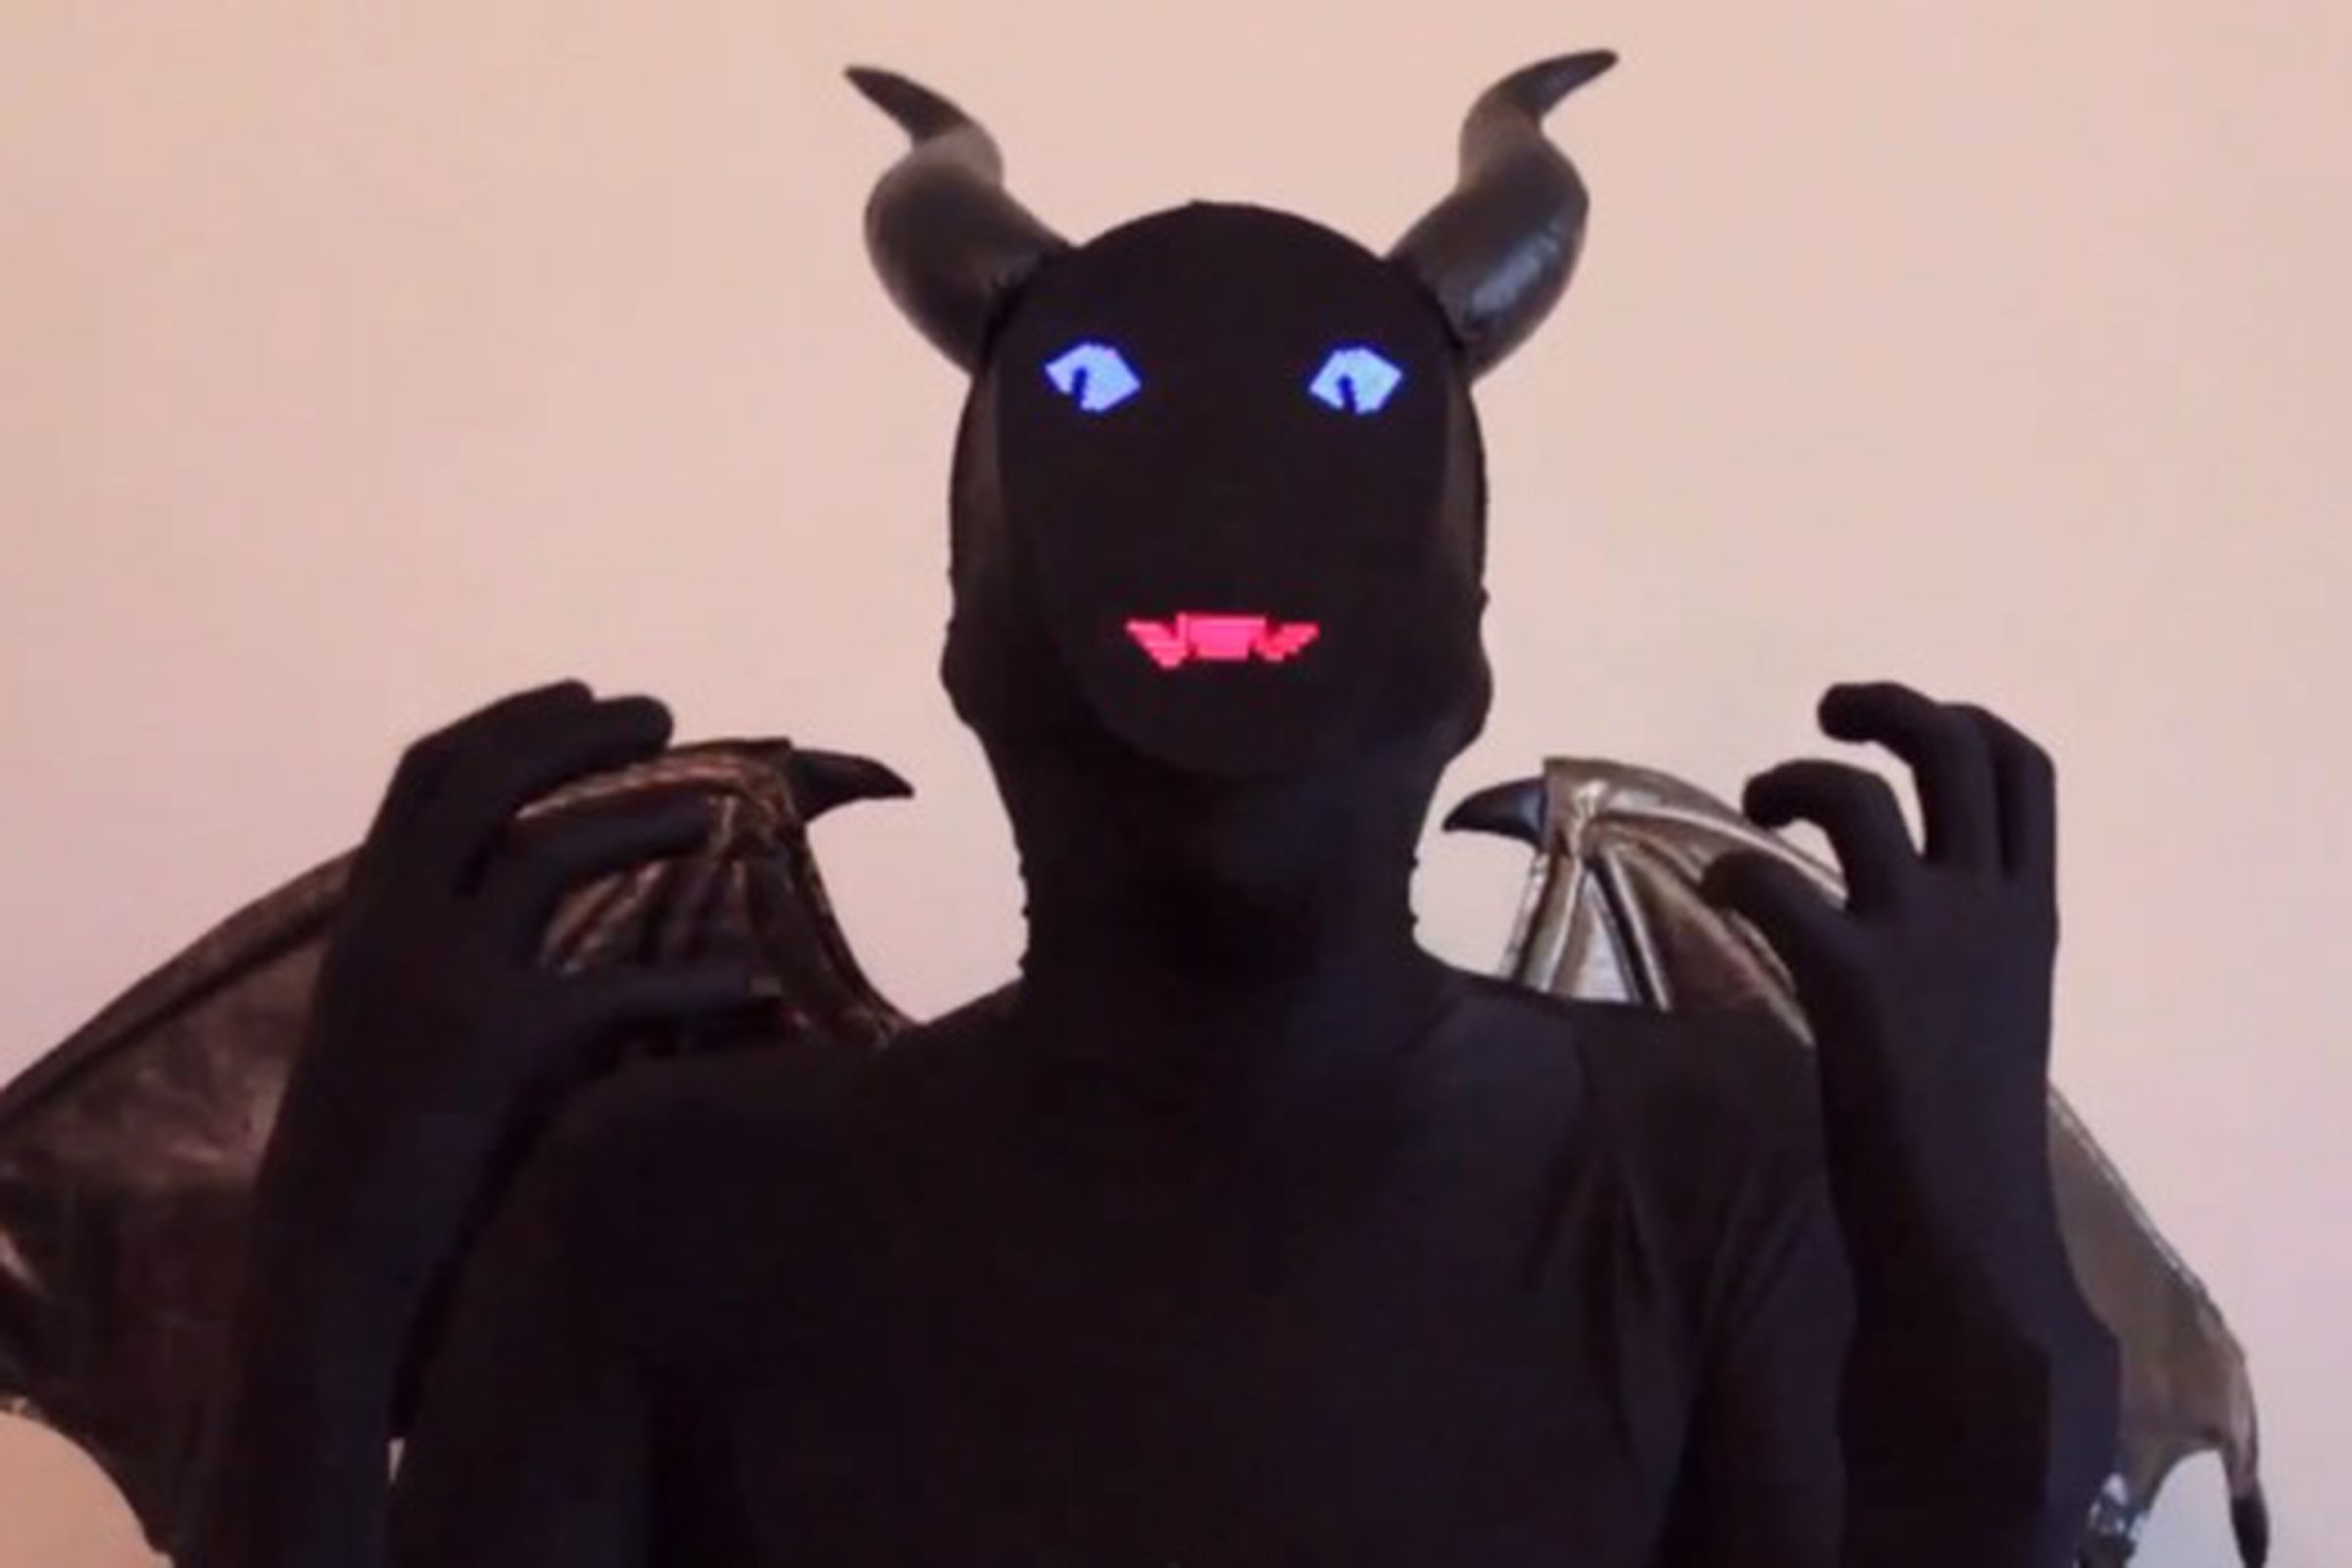 Electronic demon costume